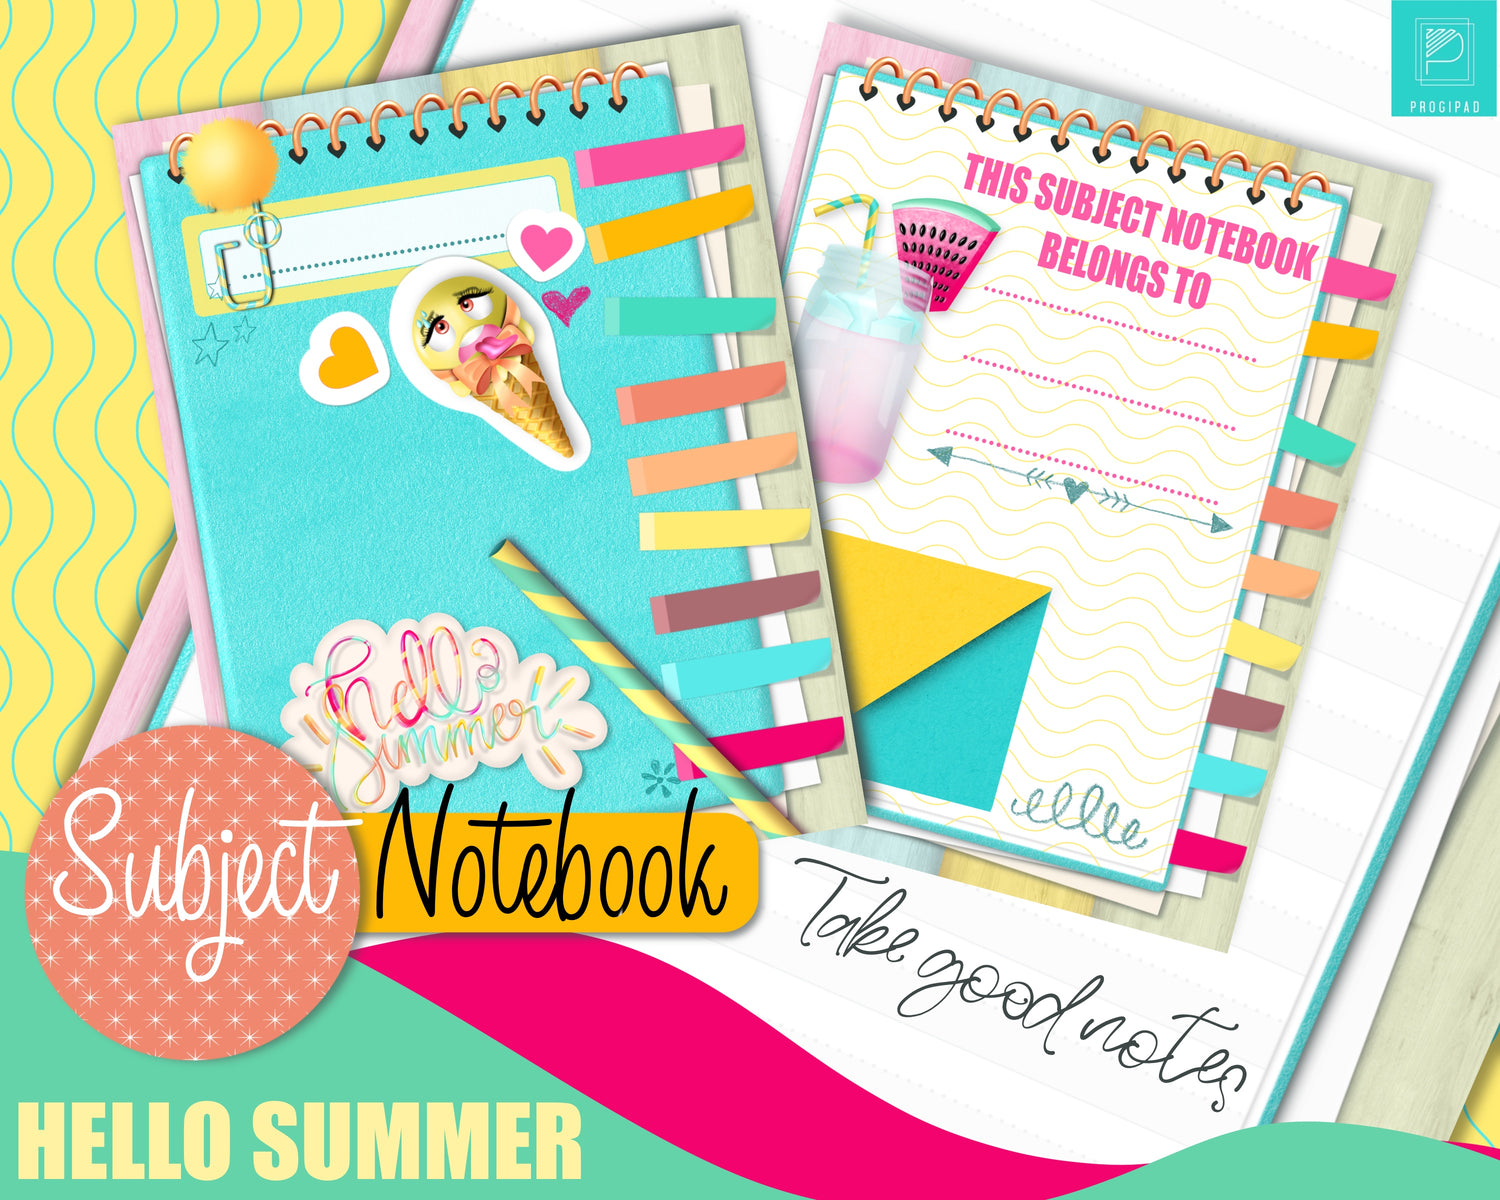 Subject Notebook "hello summer"